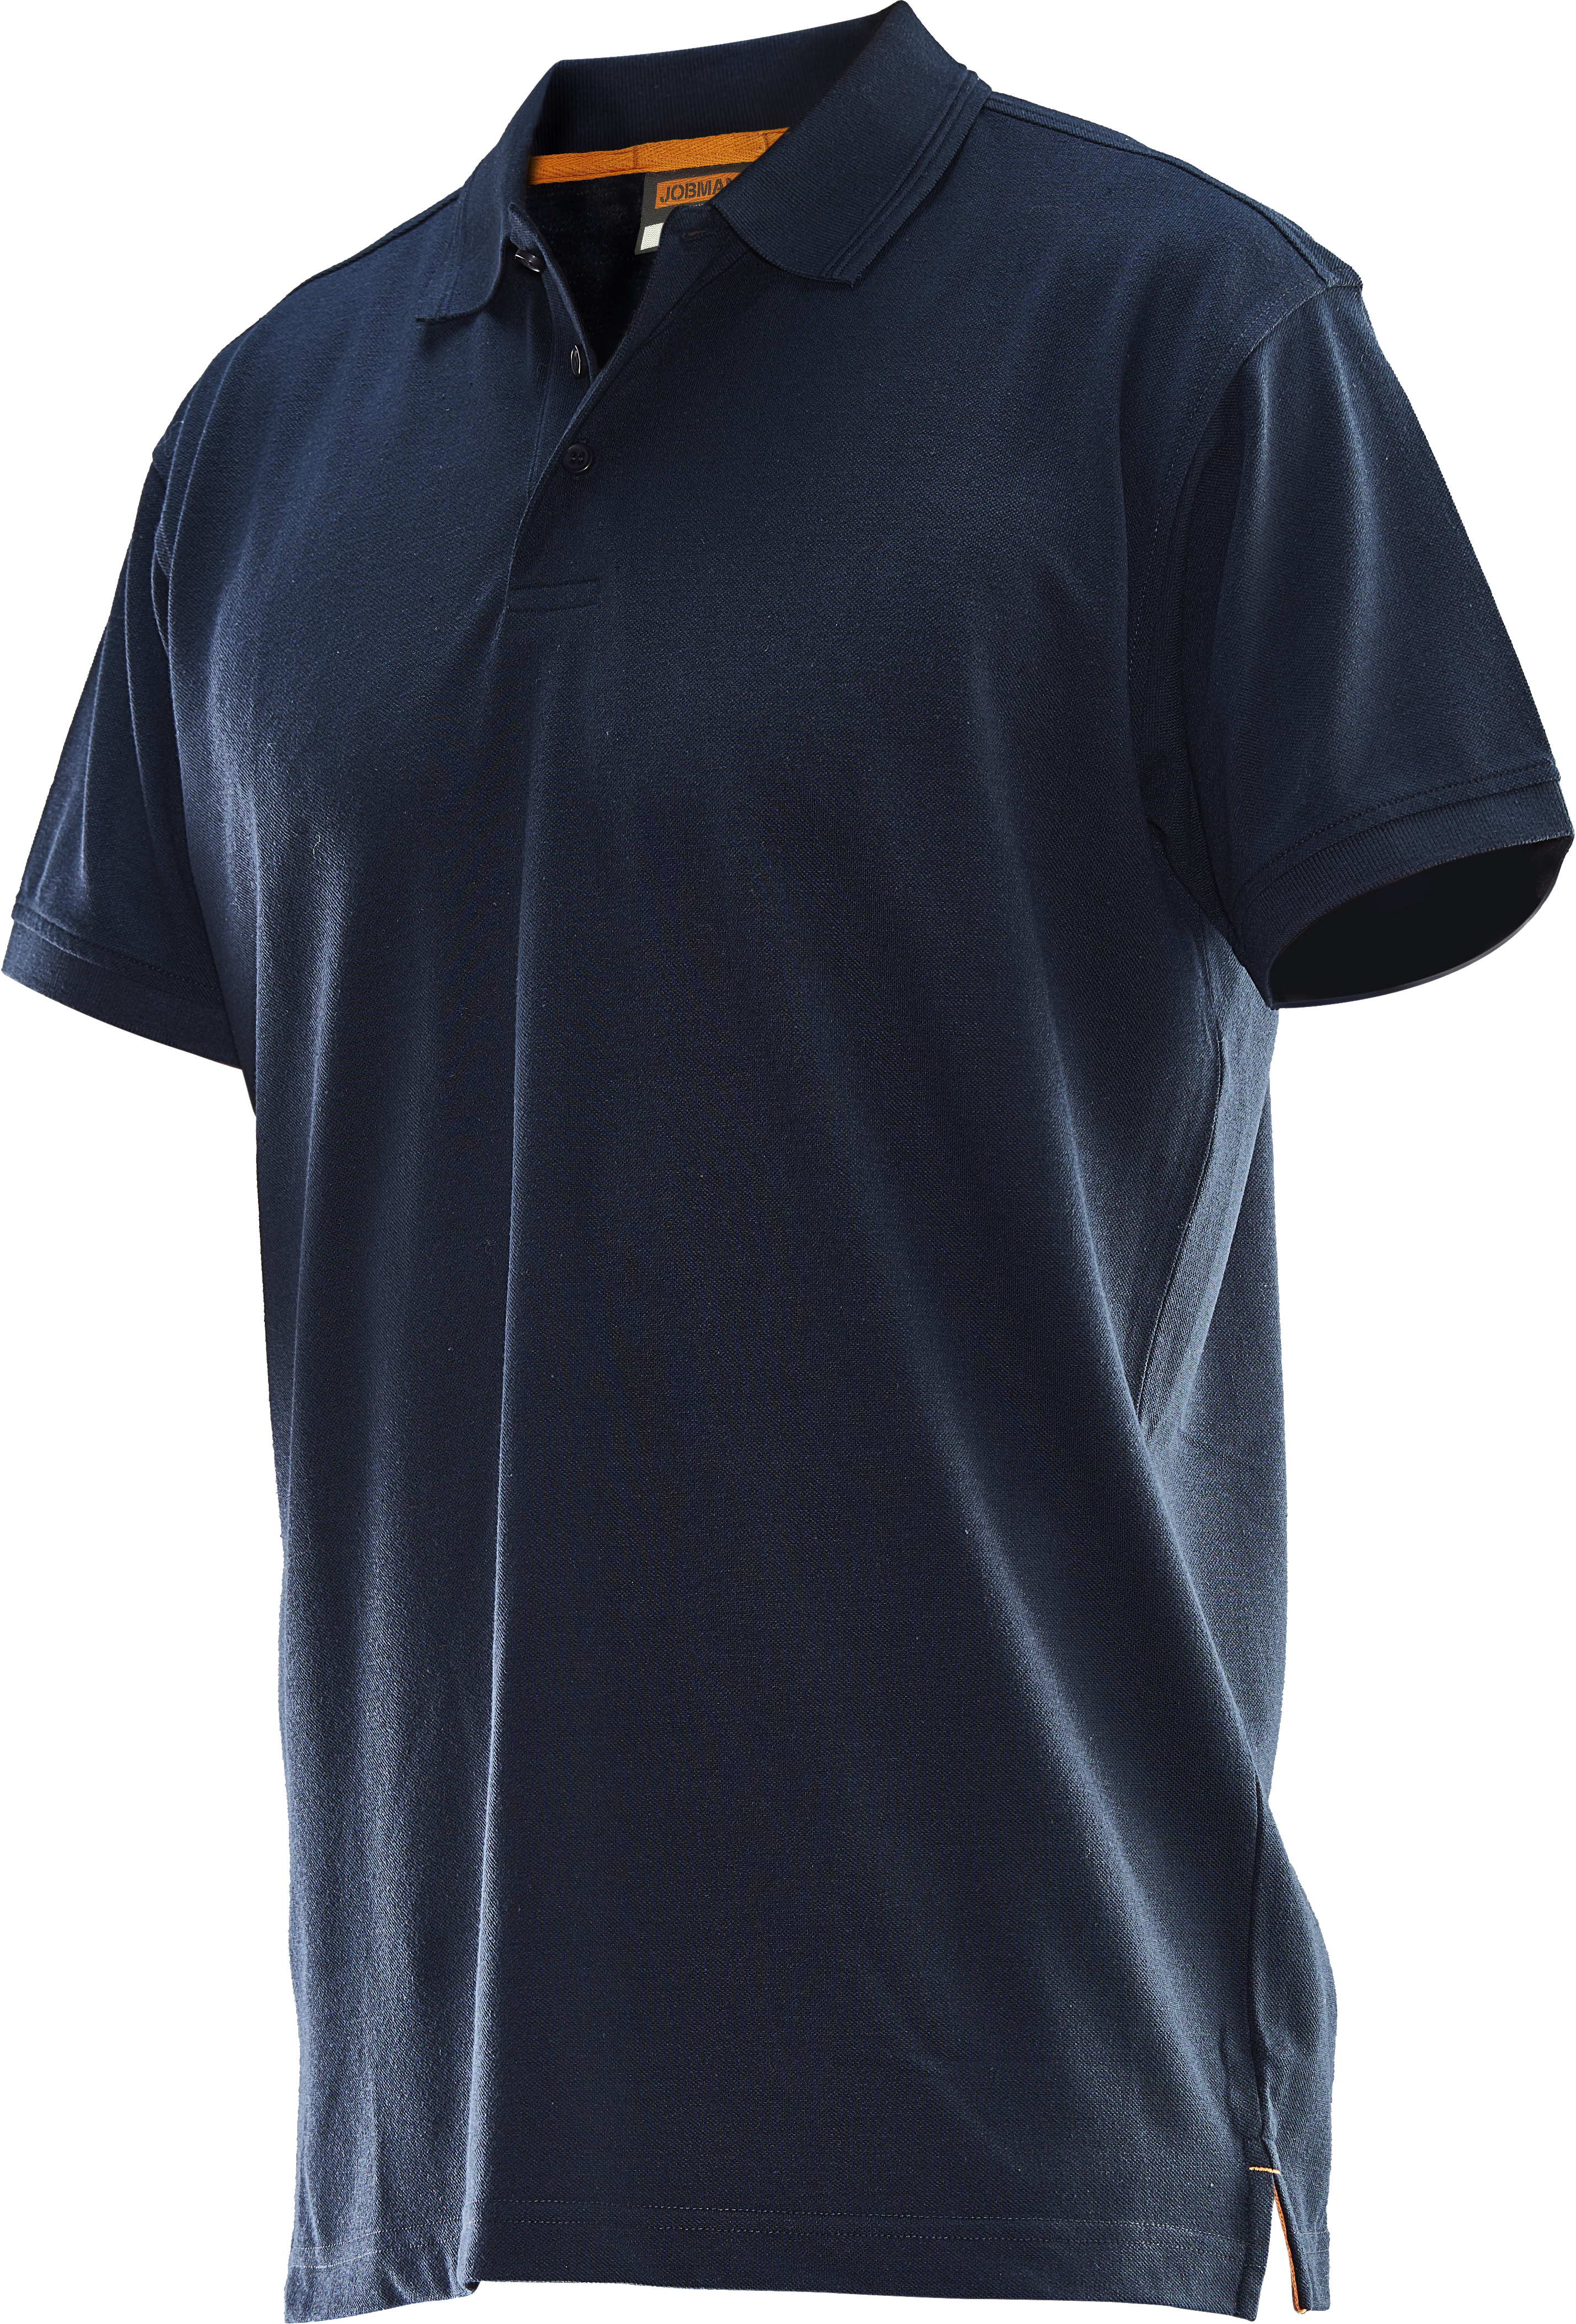 5564 T-shirt polo S bleu marine